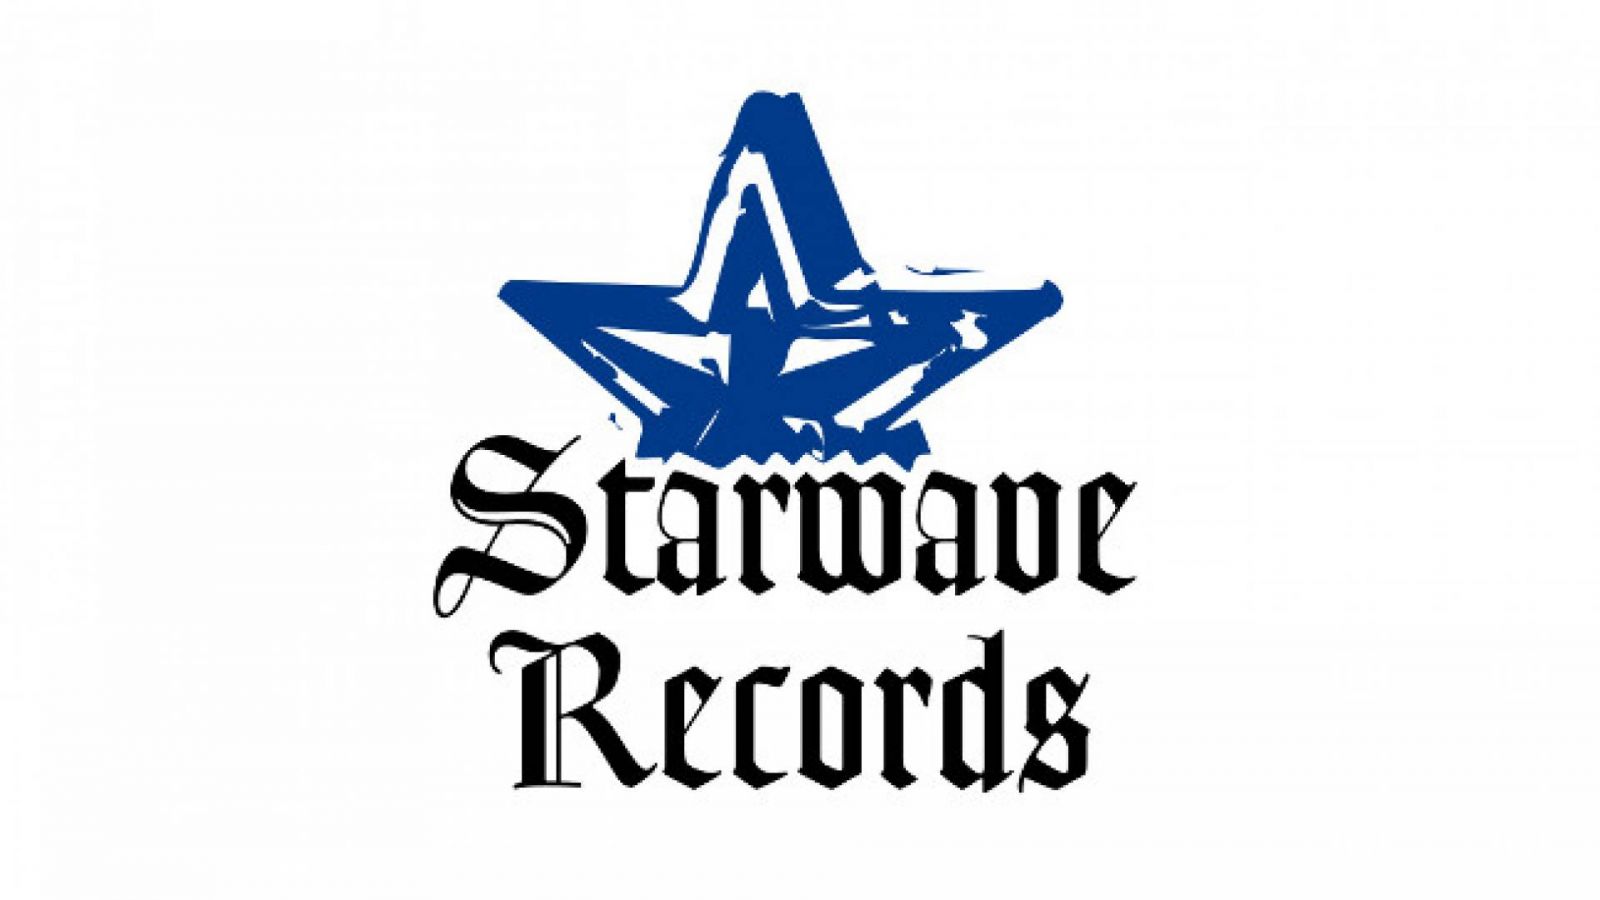 Nowe DVD od Starwave Records © Starwave Records